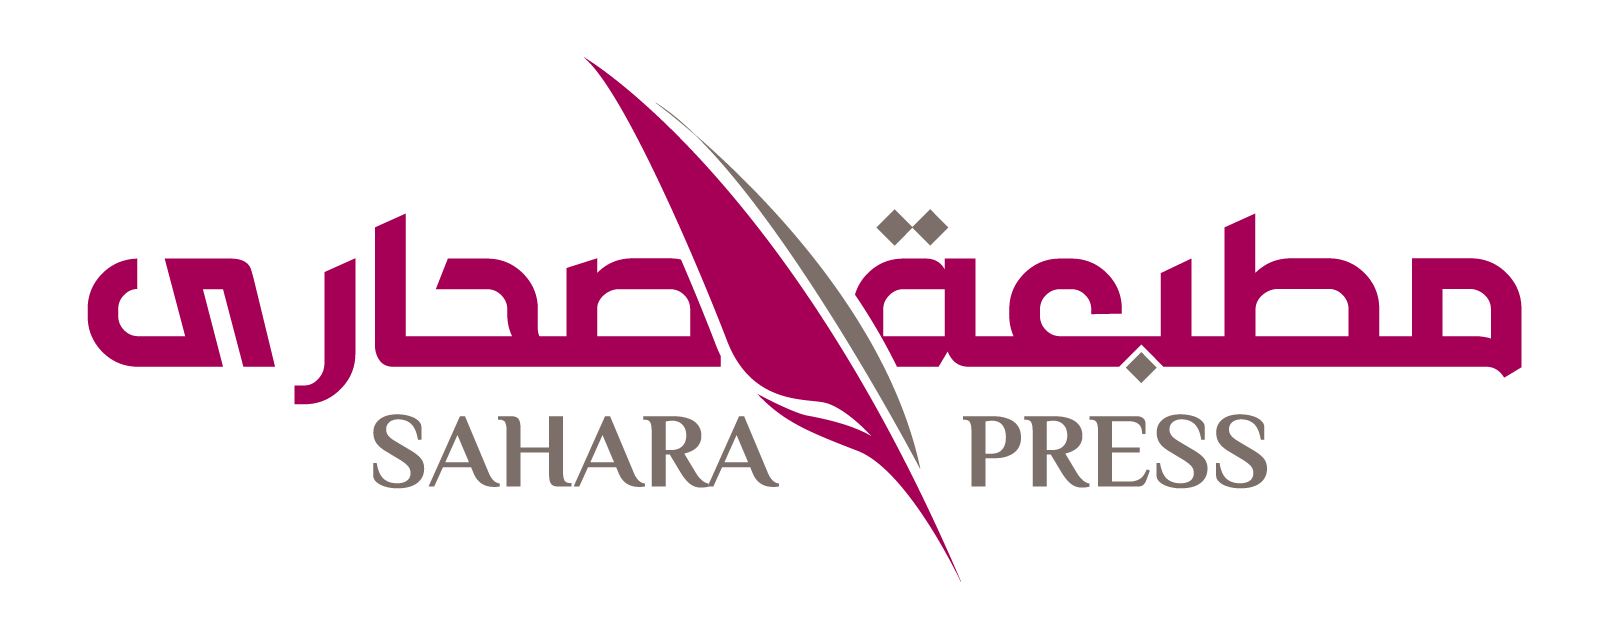 Sahara press